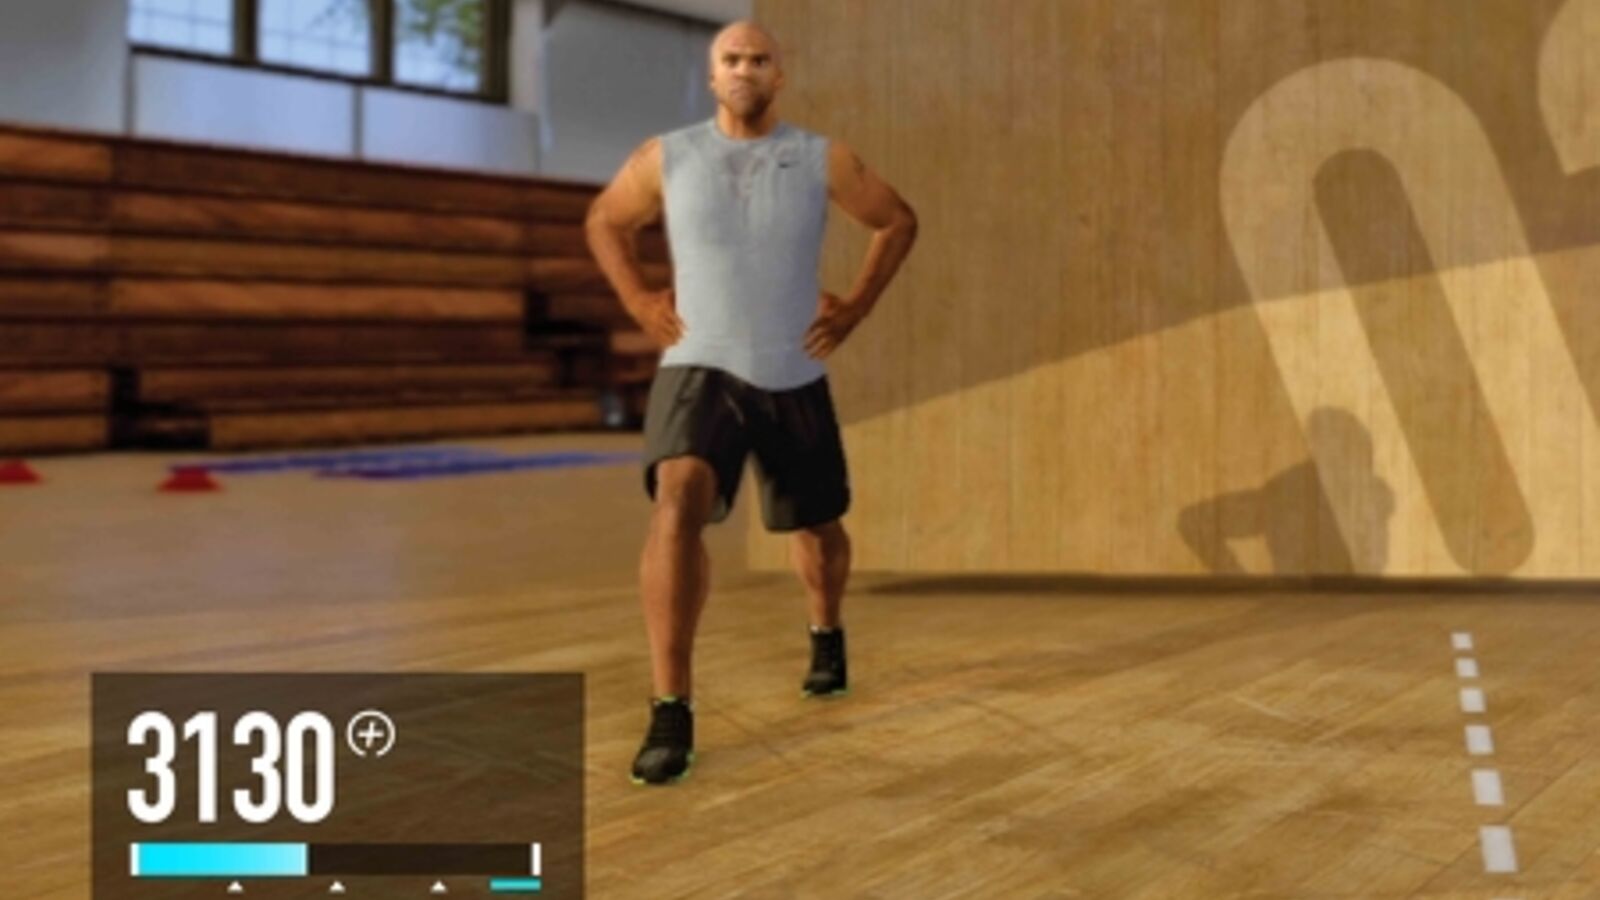 Nike Kinect Training Wallpapers